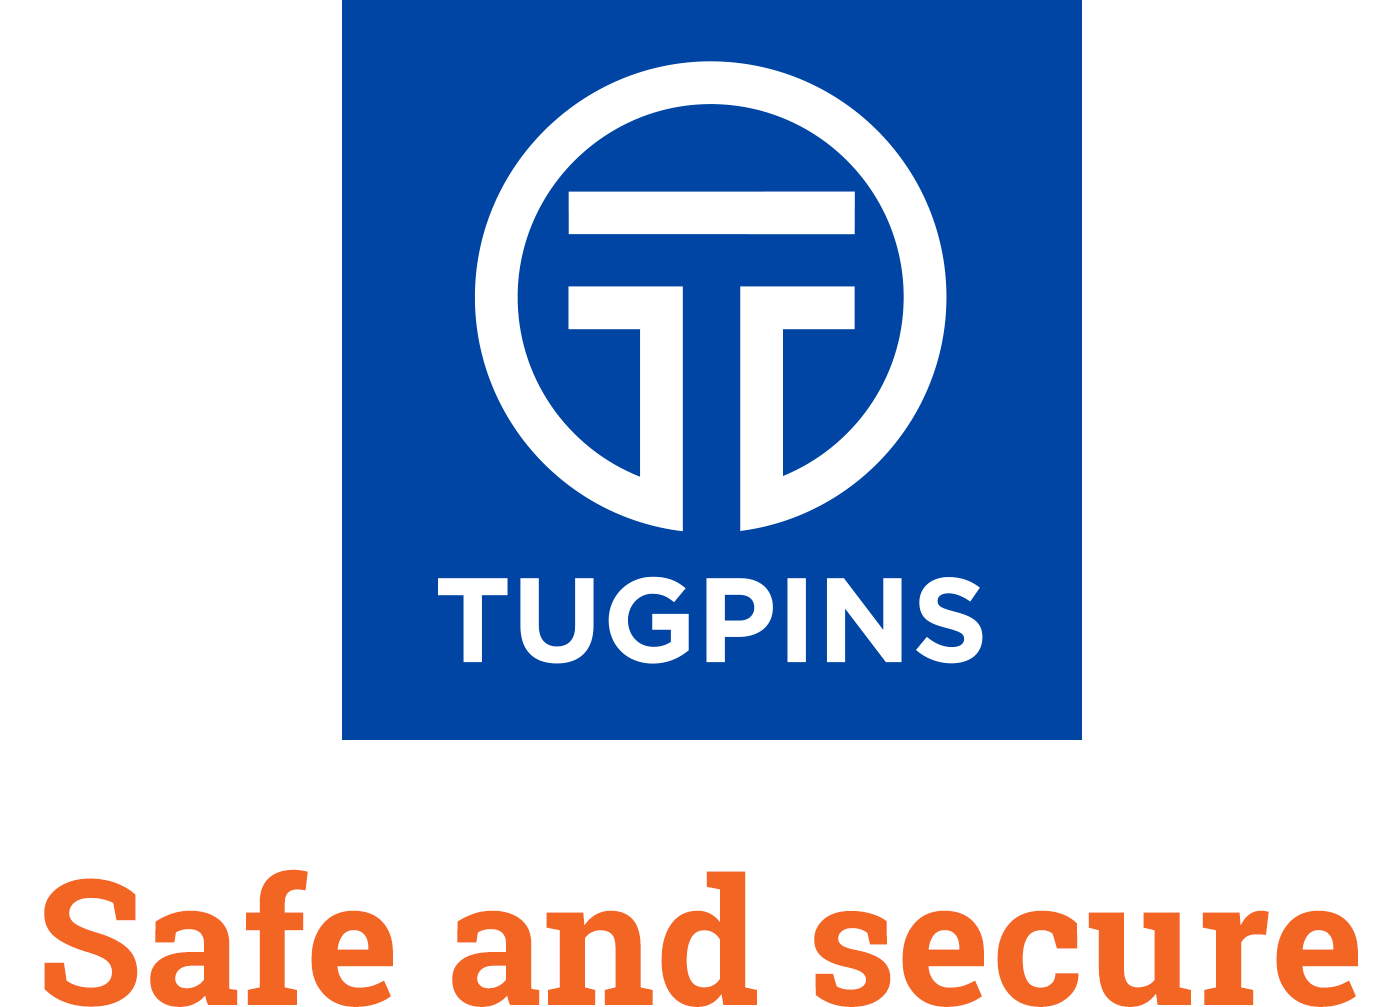 TUGPINS logo groot